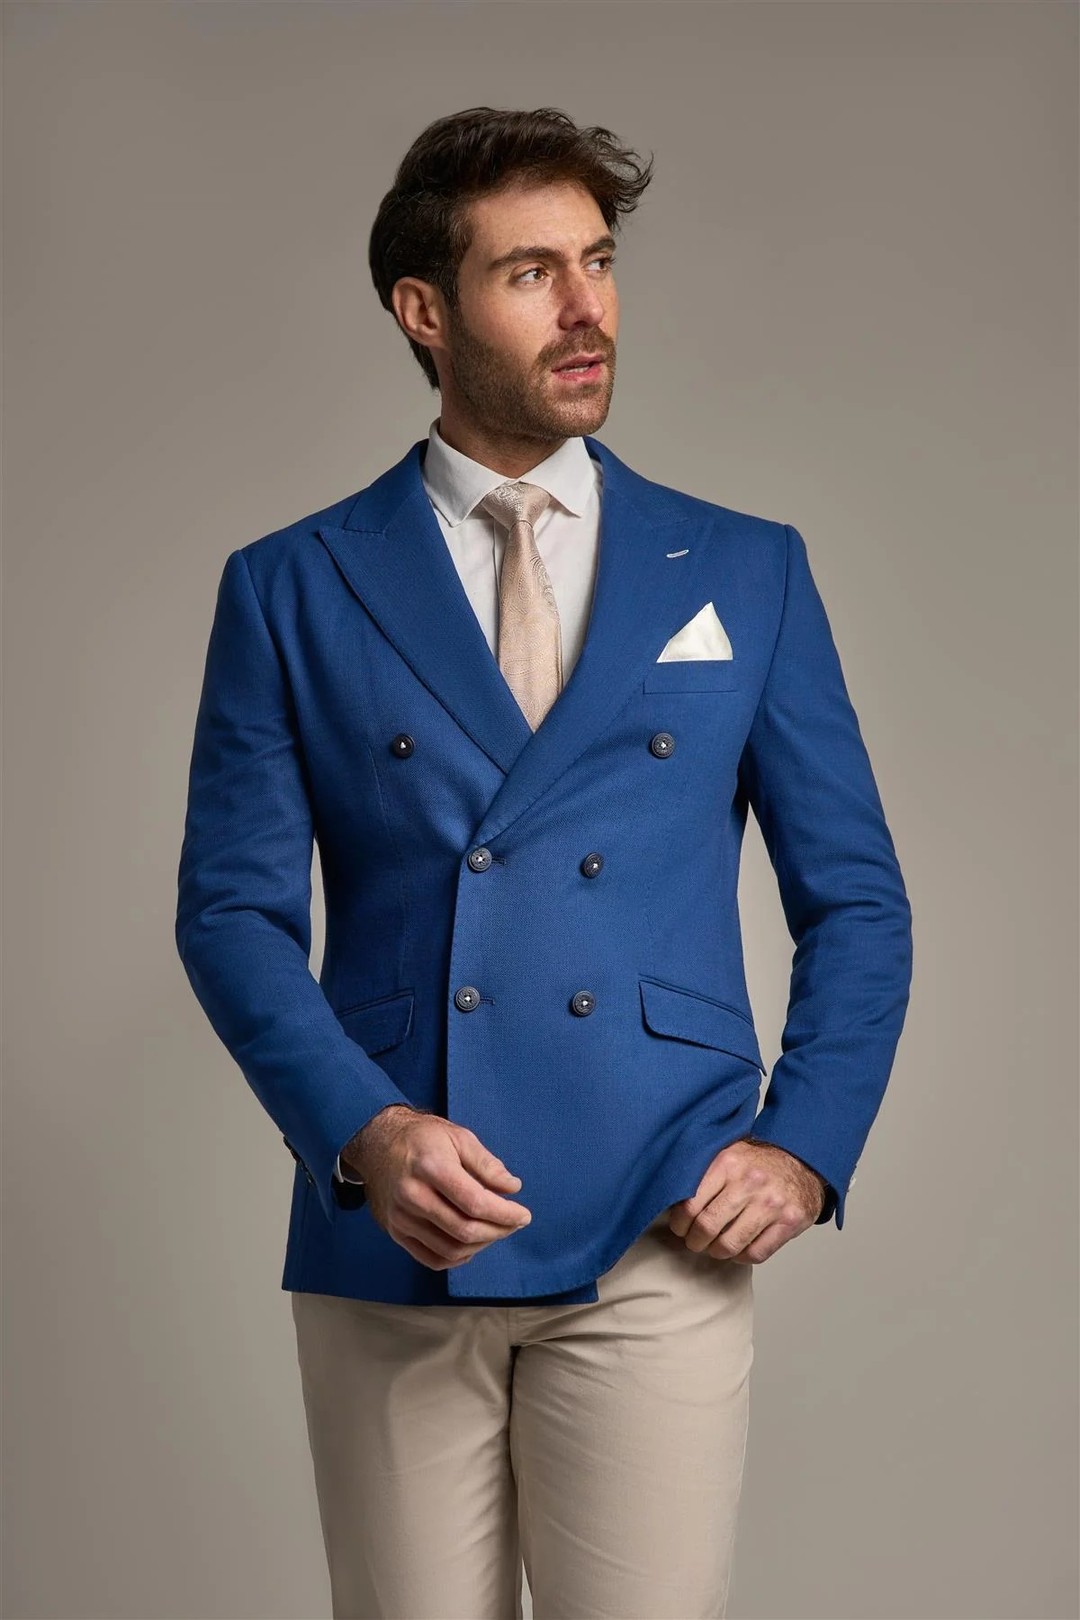 Men's Blazer Jackets: Formal and Casual Blazer for Men